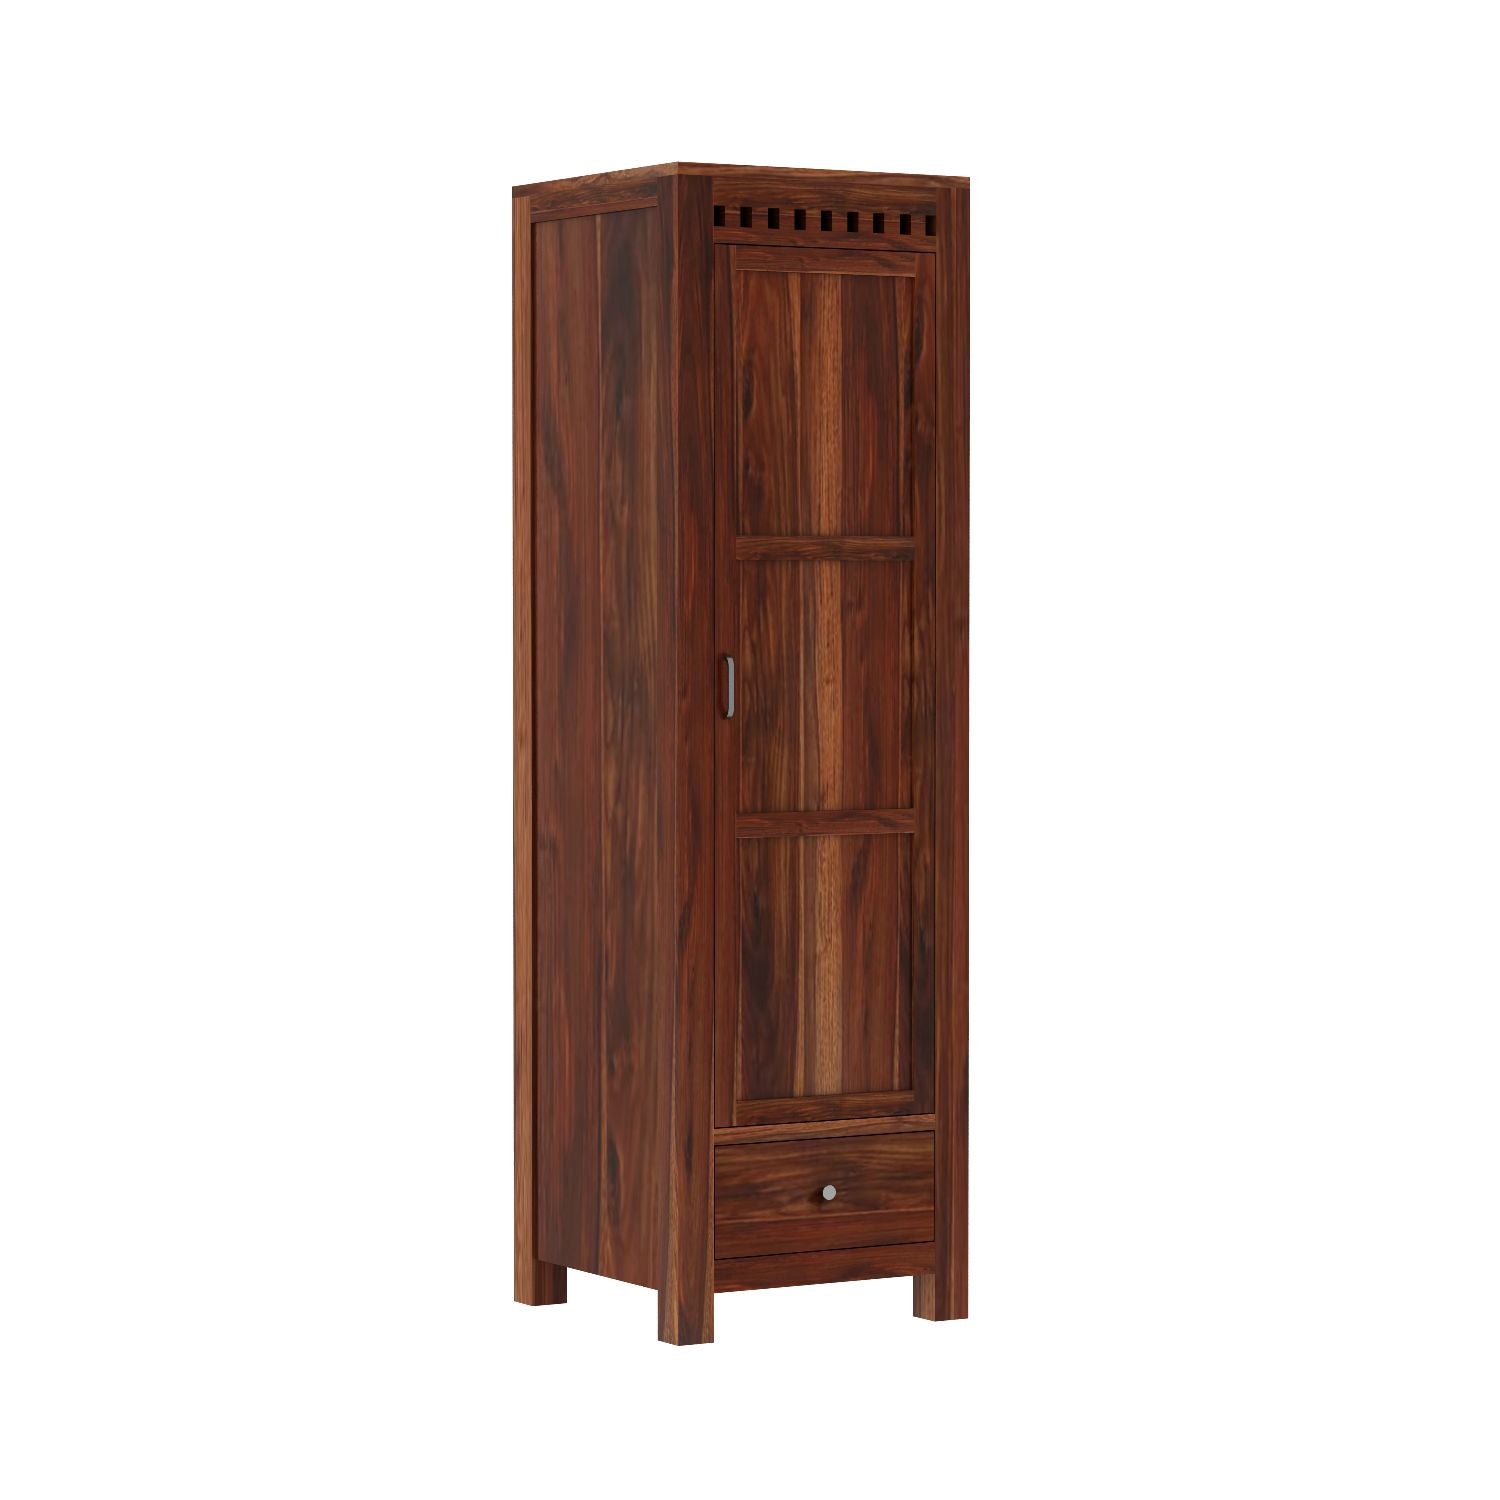 Amer Solid Sheesham Wood Single Door Wardrobe With One Drawer (Natural Finish)